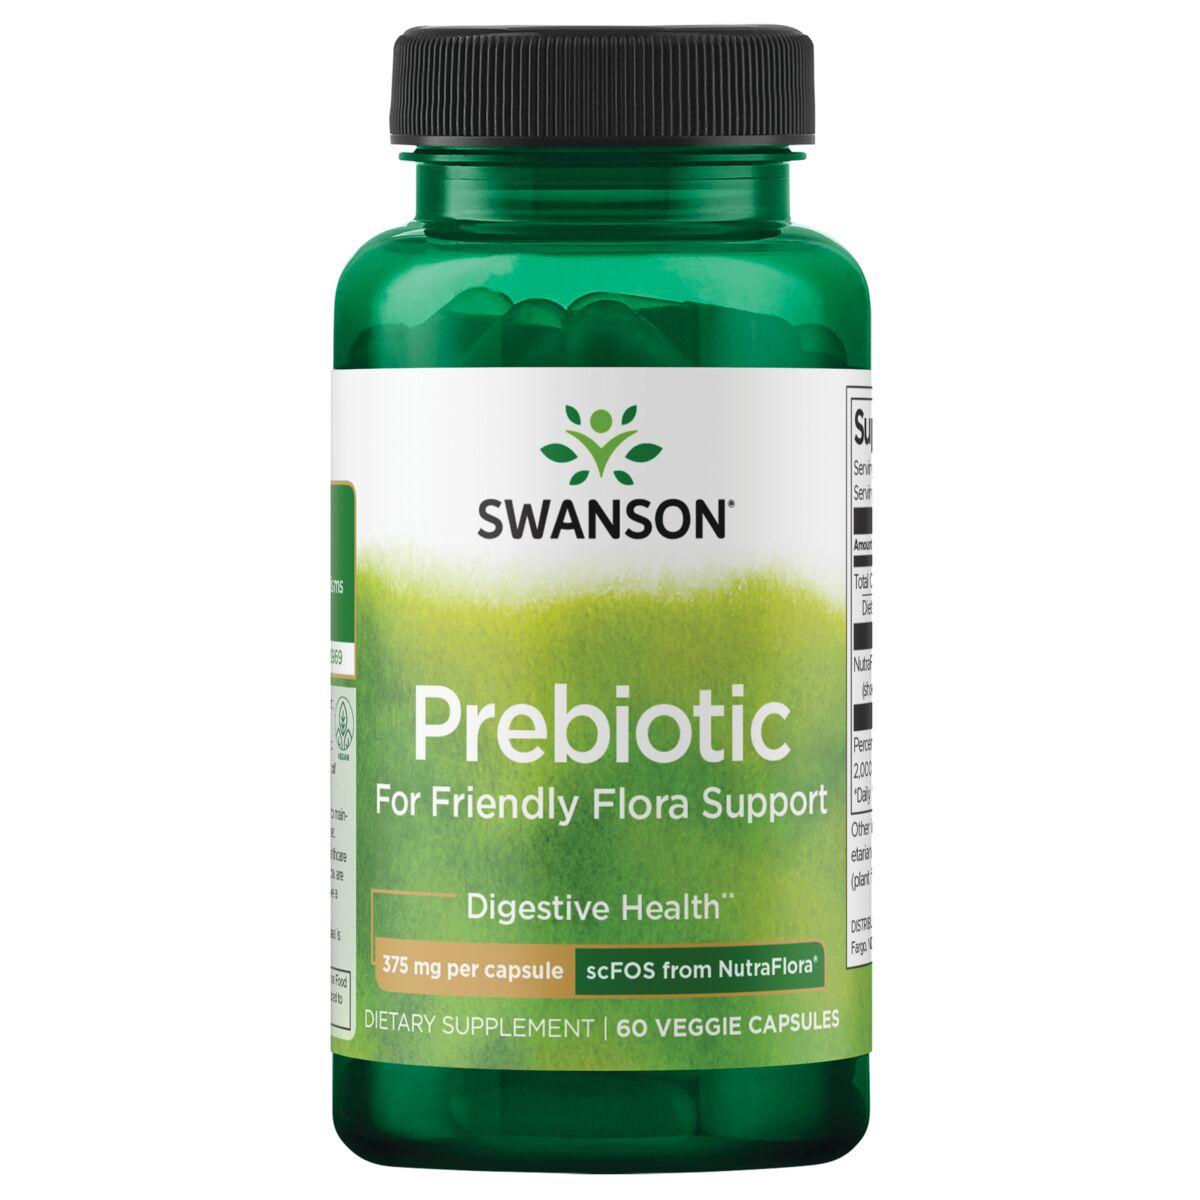 Swanson Probiotics Prebiotic for Friendly Flora Support - Fos from Nutraflora Supplement Vitamin | 375 mg | 60 Veg Caps